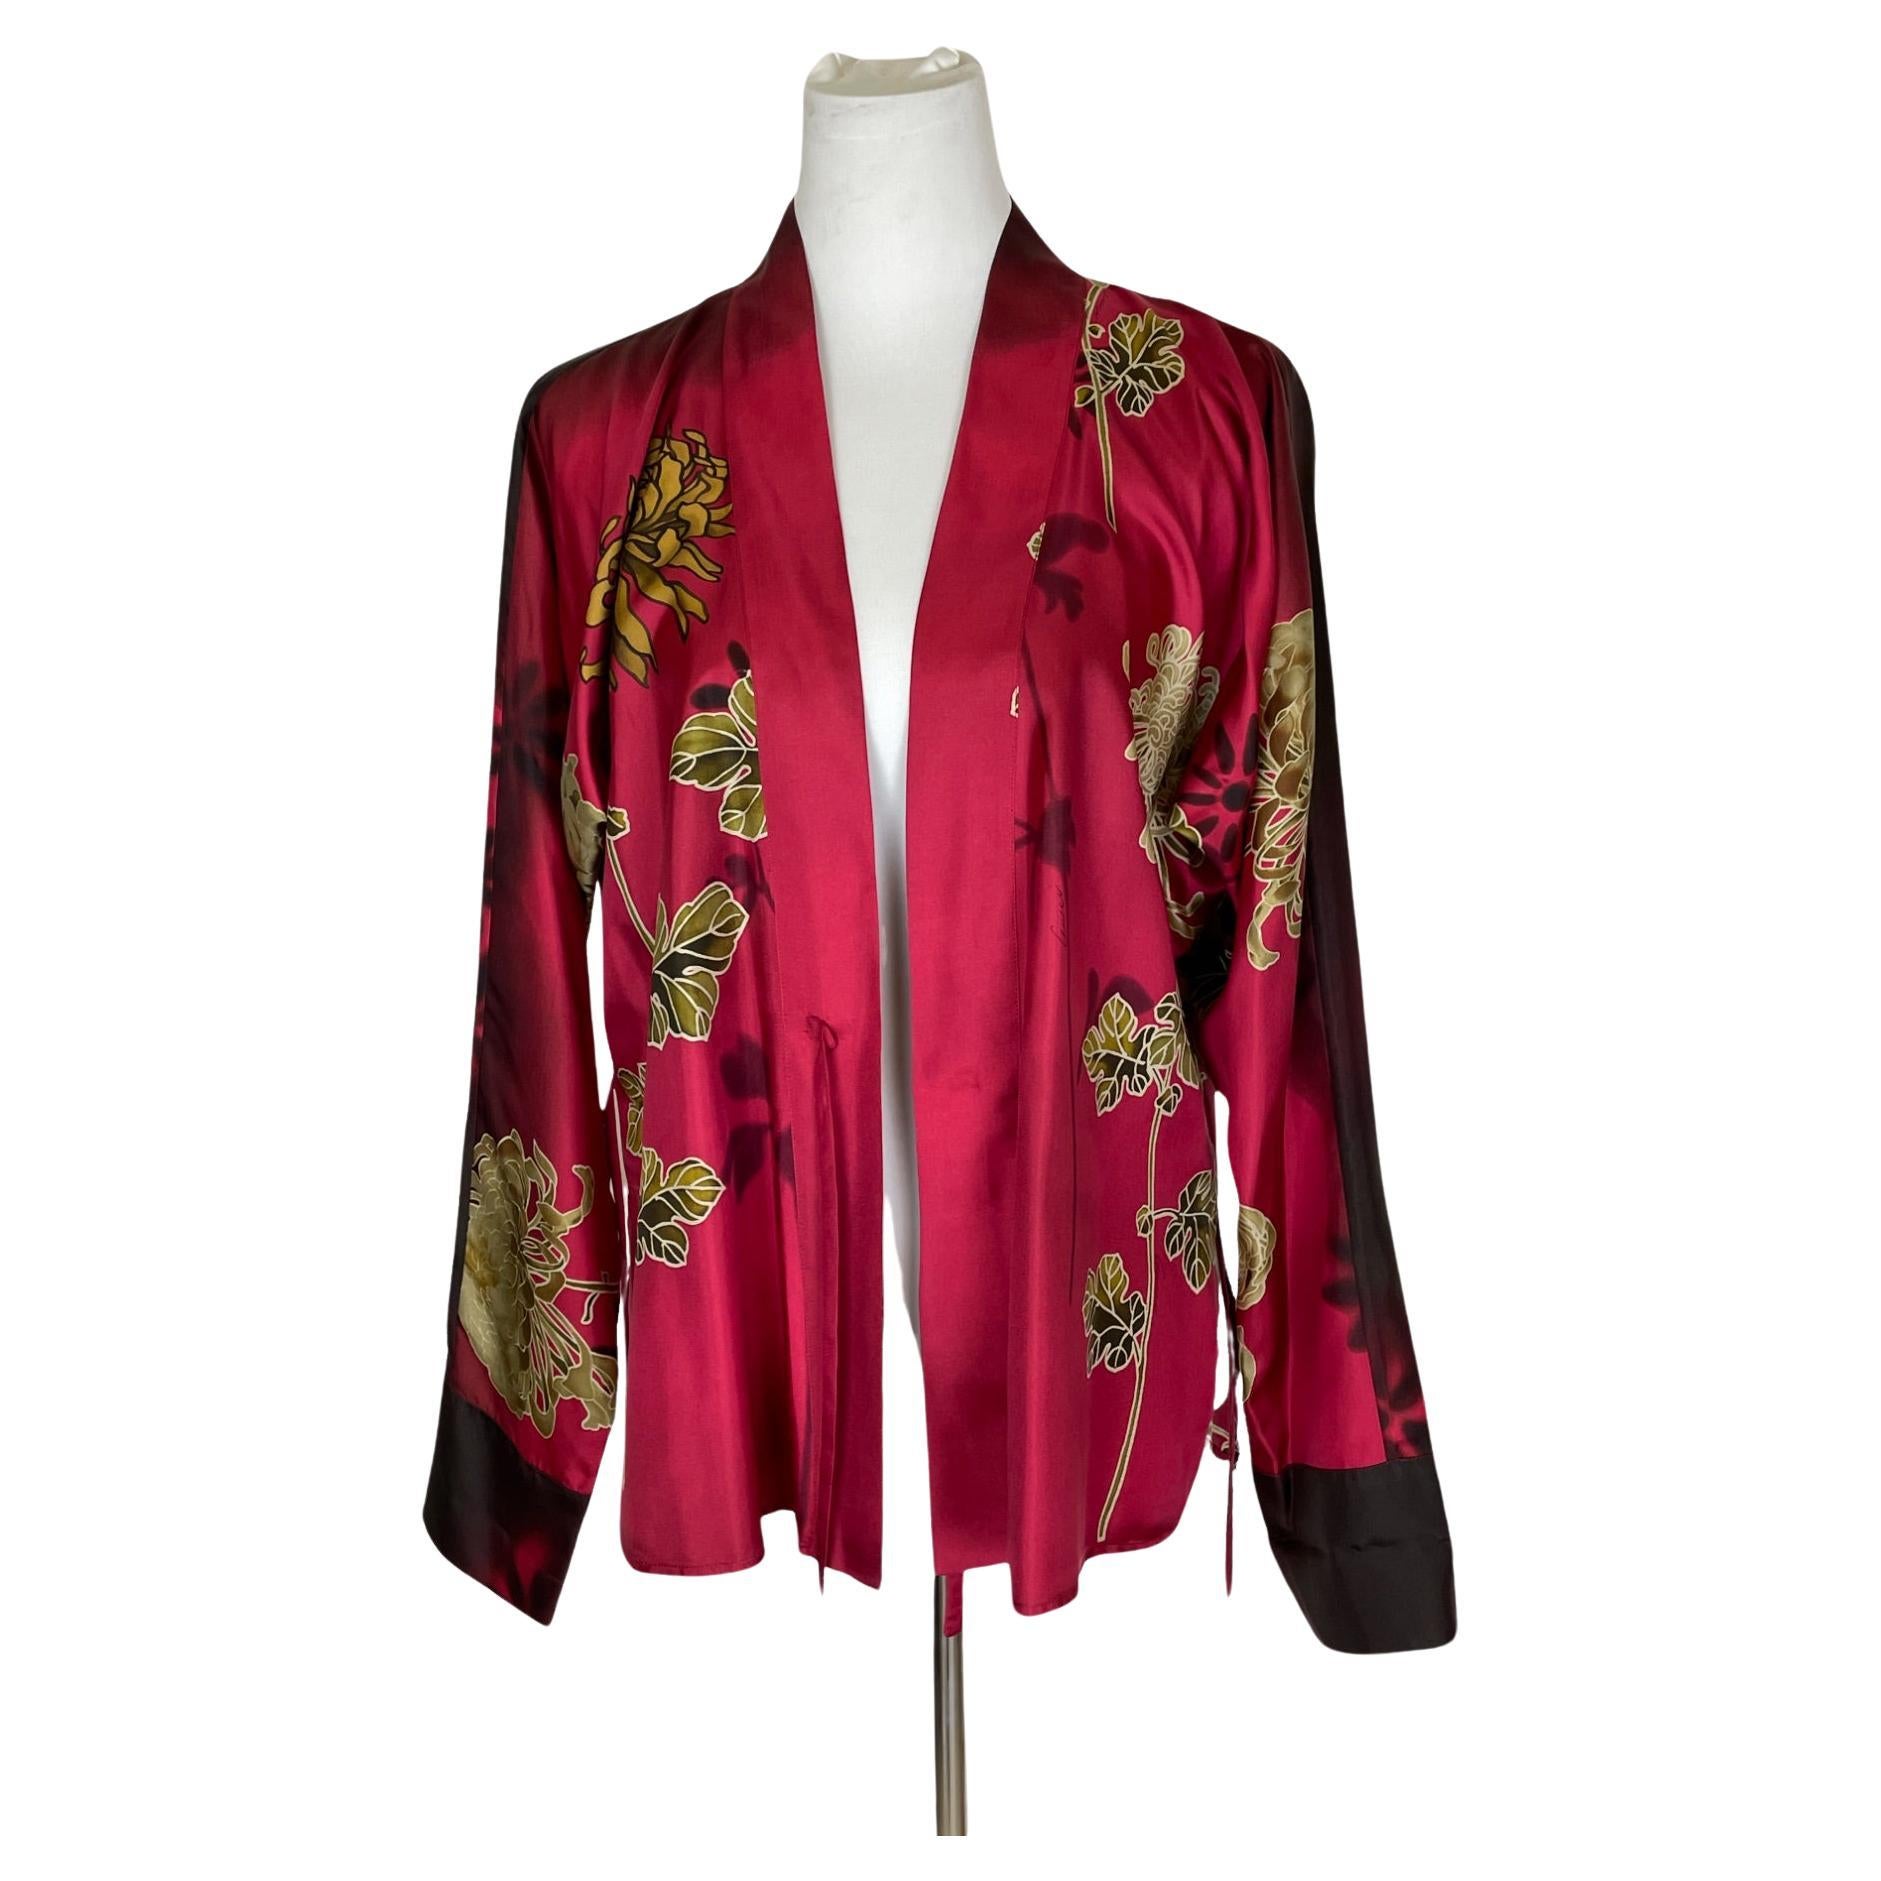 Gucci Kimono Shirt - Tom Ford Era - S/S 2001 For Sale